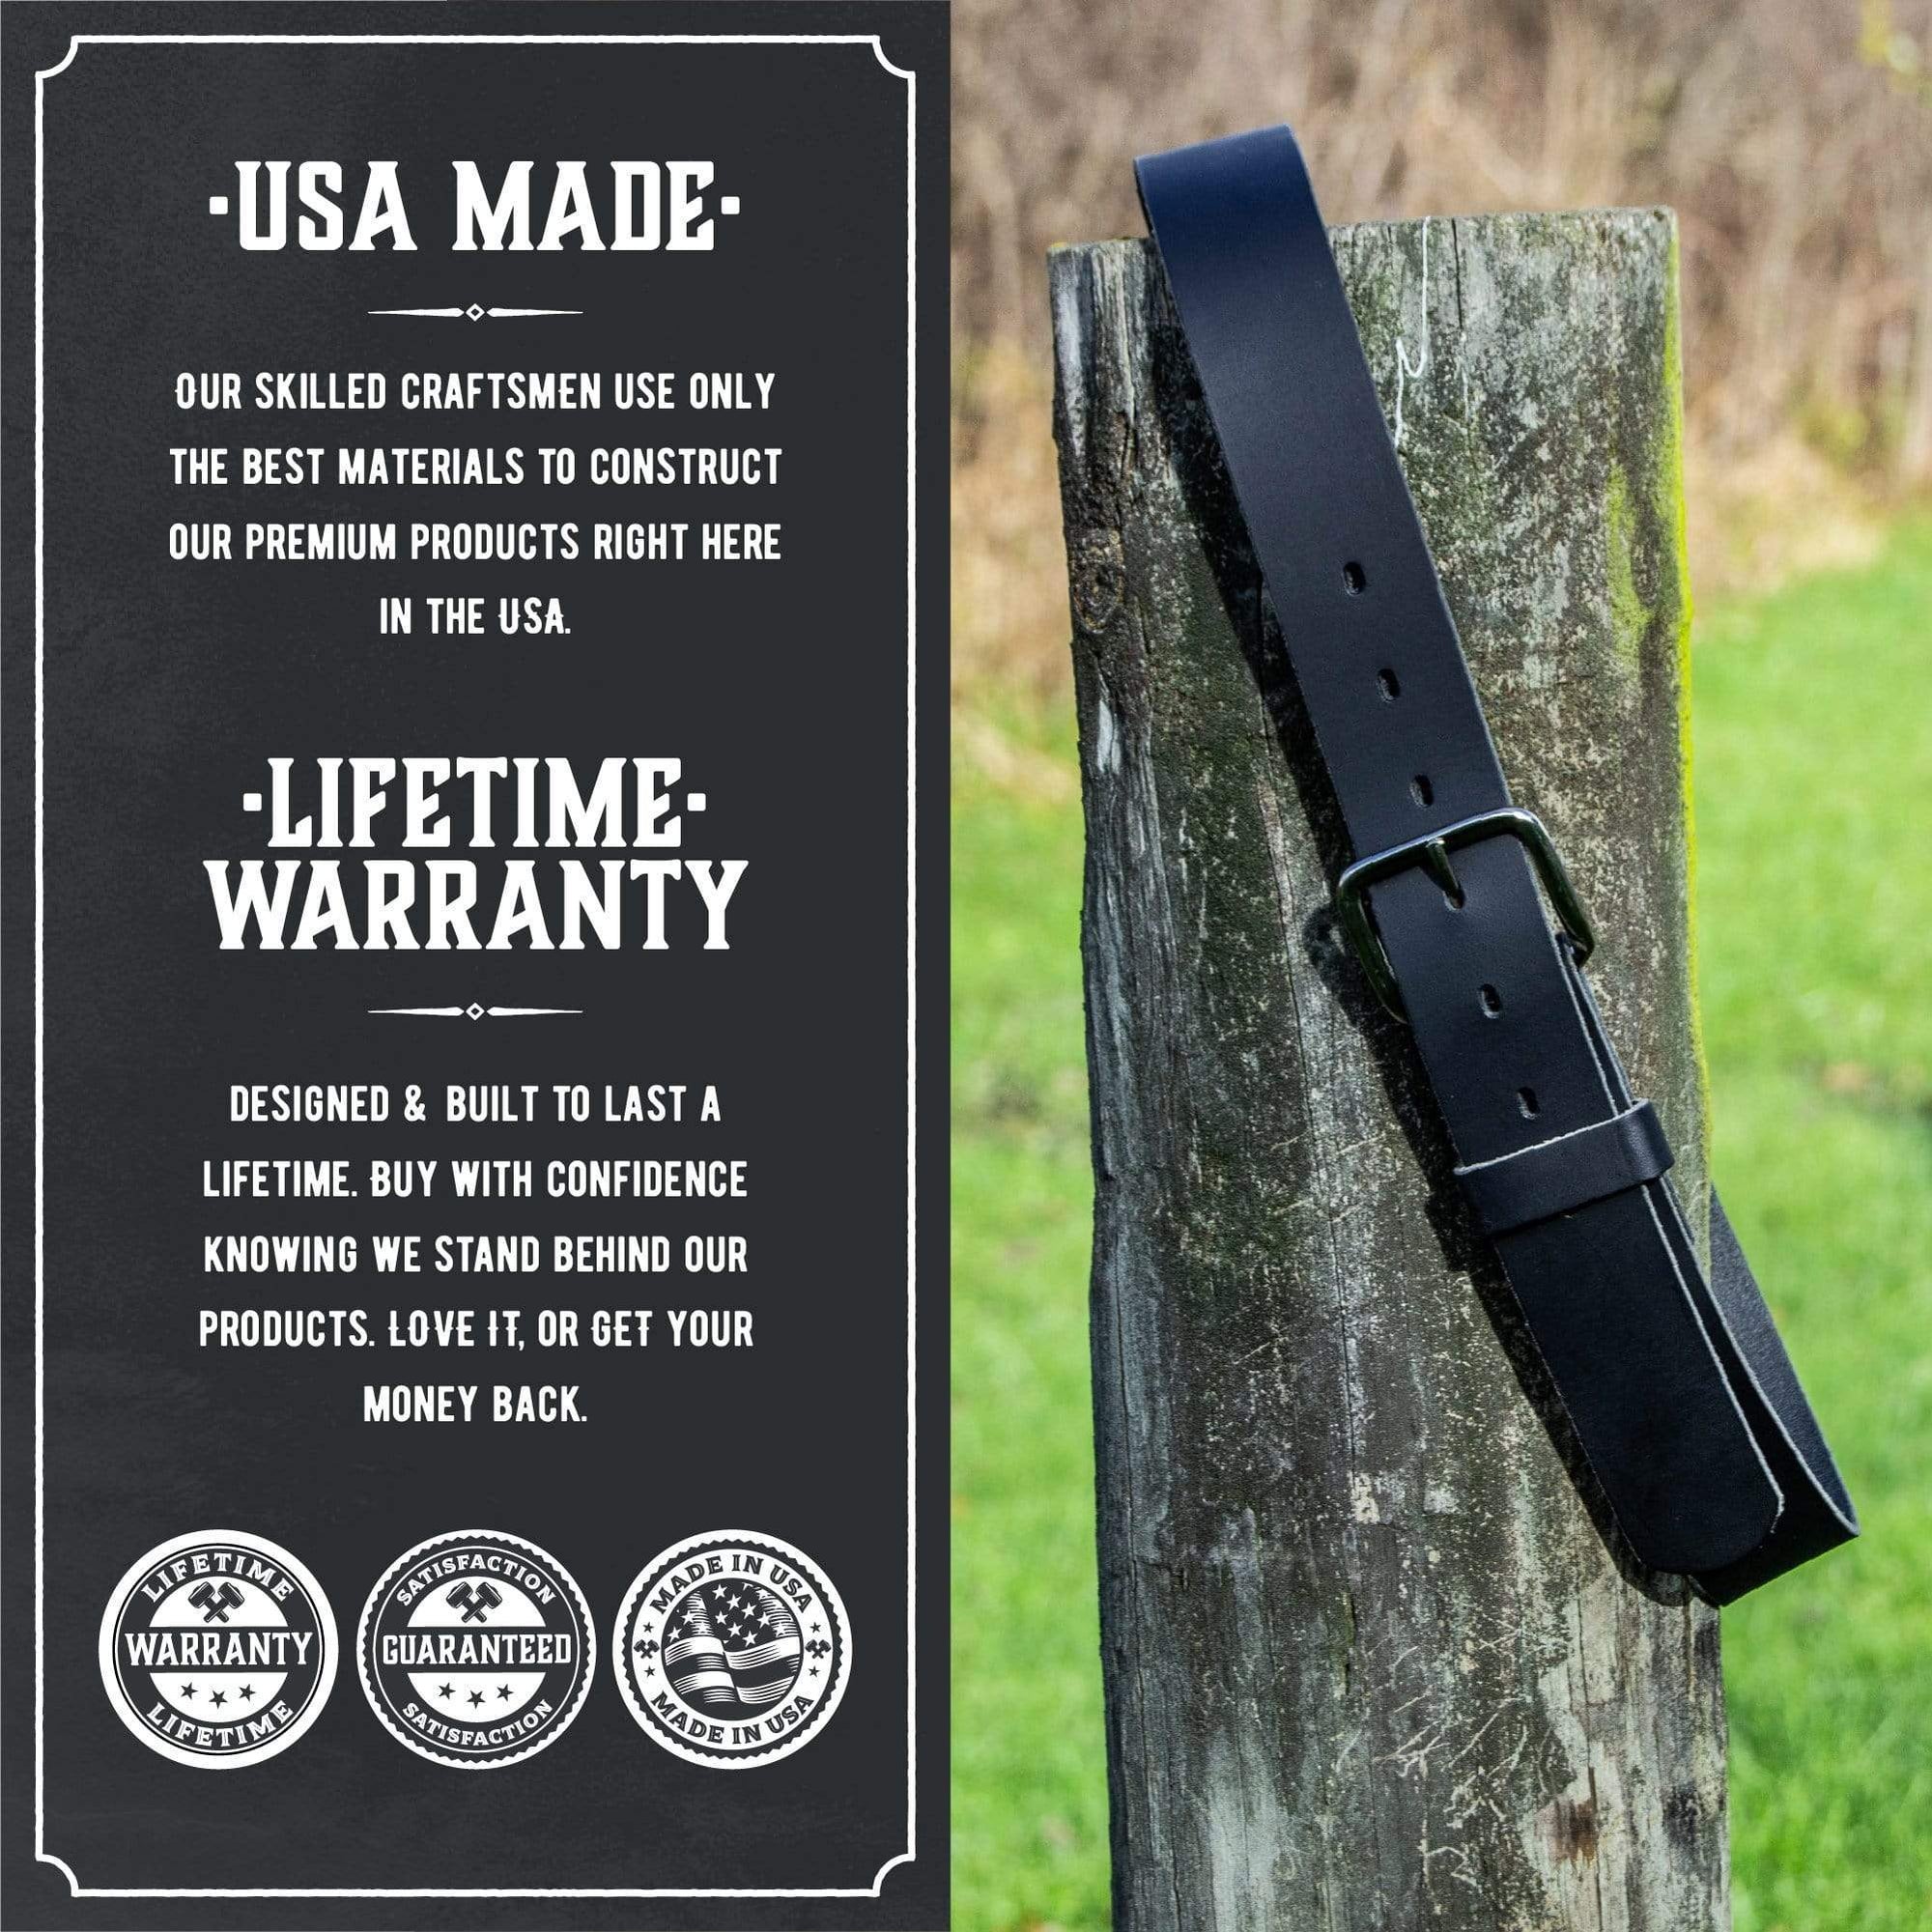 Main Street Forge Belt The Journeyman Leather Belt | Made in USA | Full Grain Leather Mens Belt